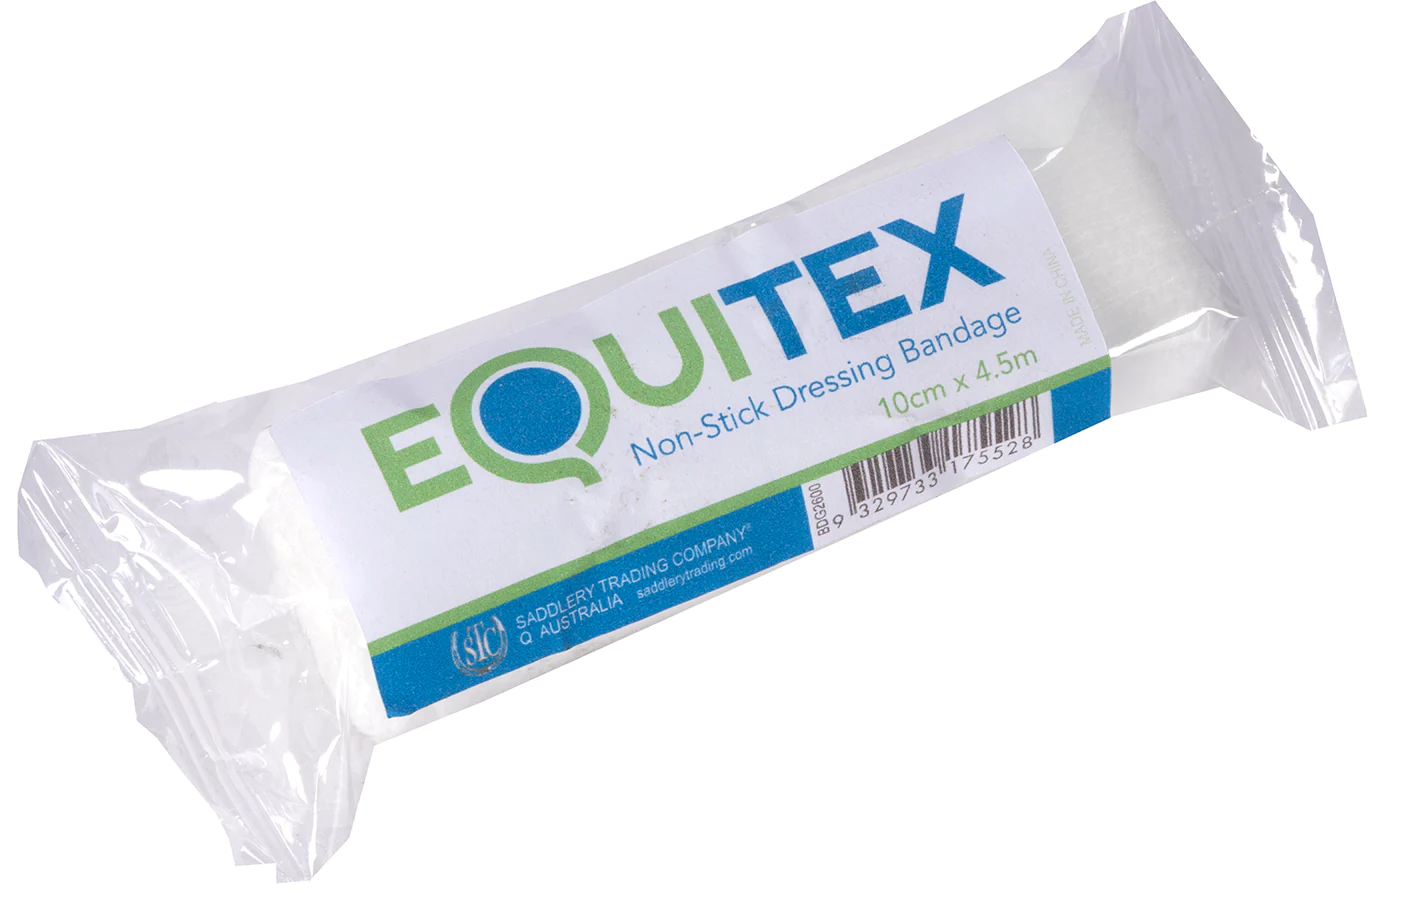 Equitex Non-Stick Dressing Bandage